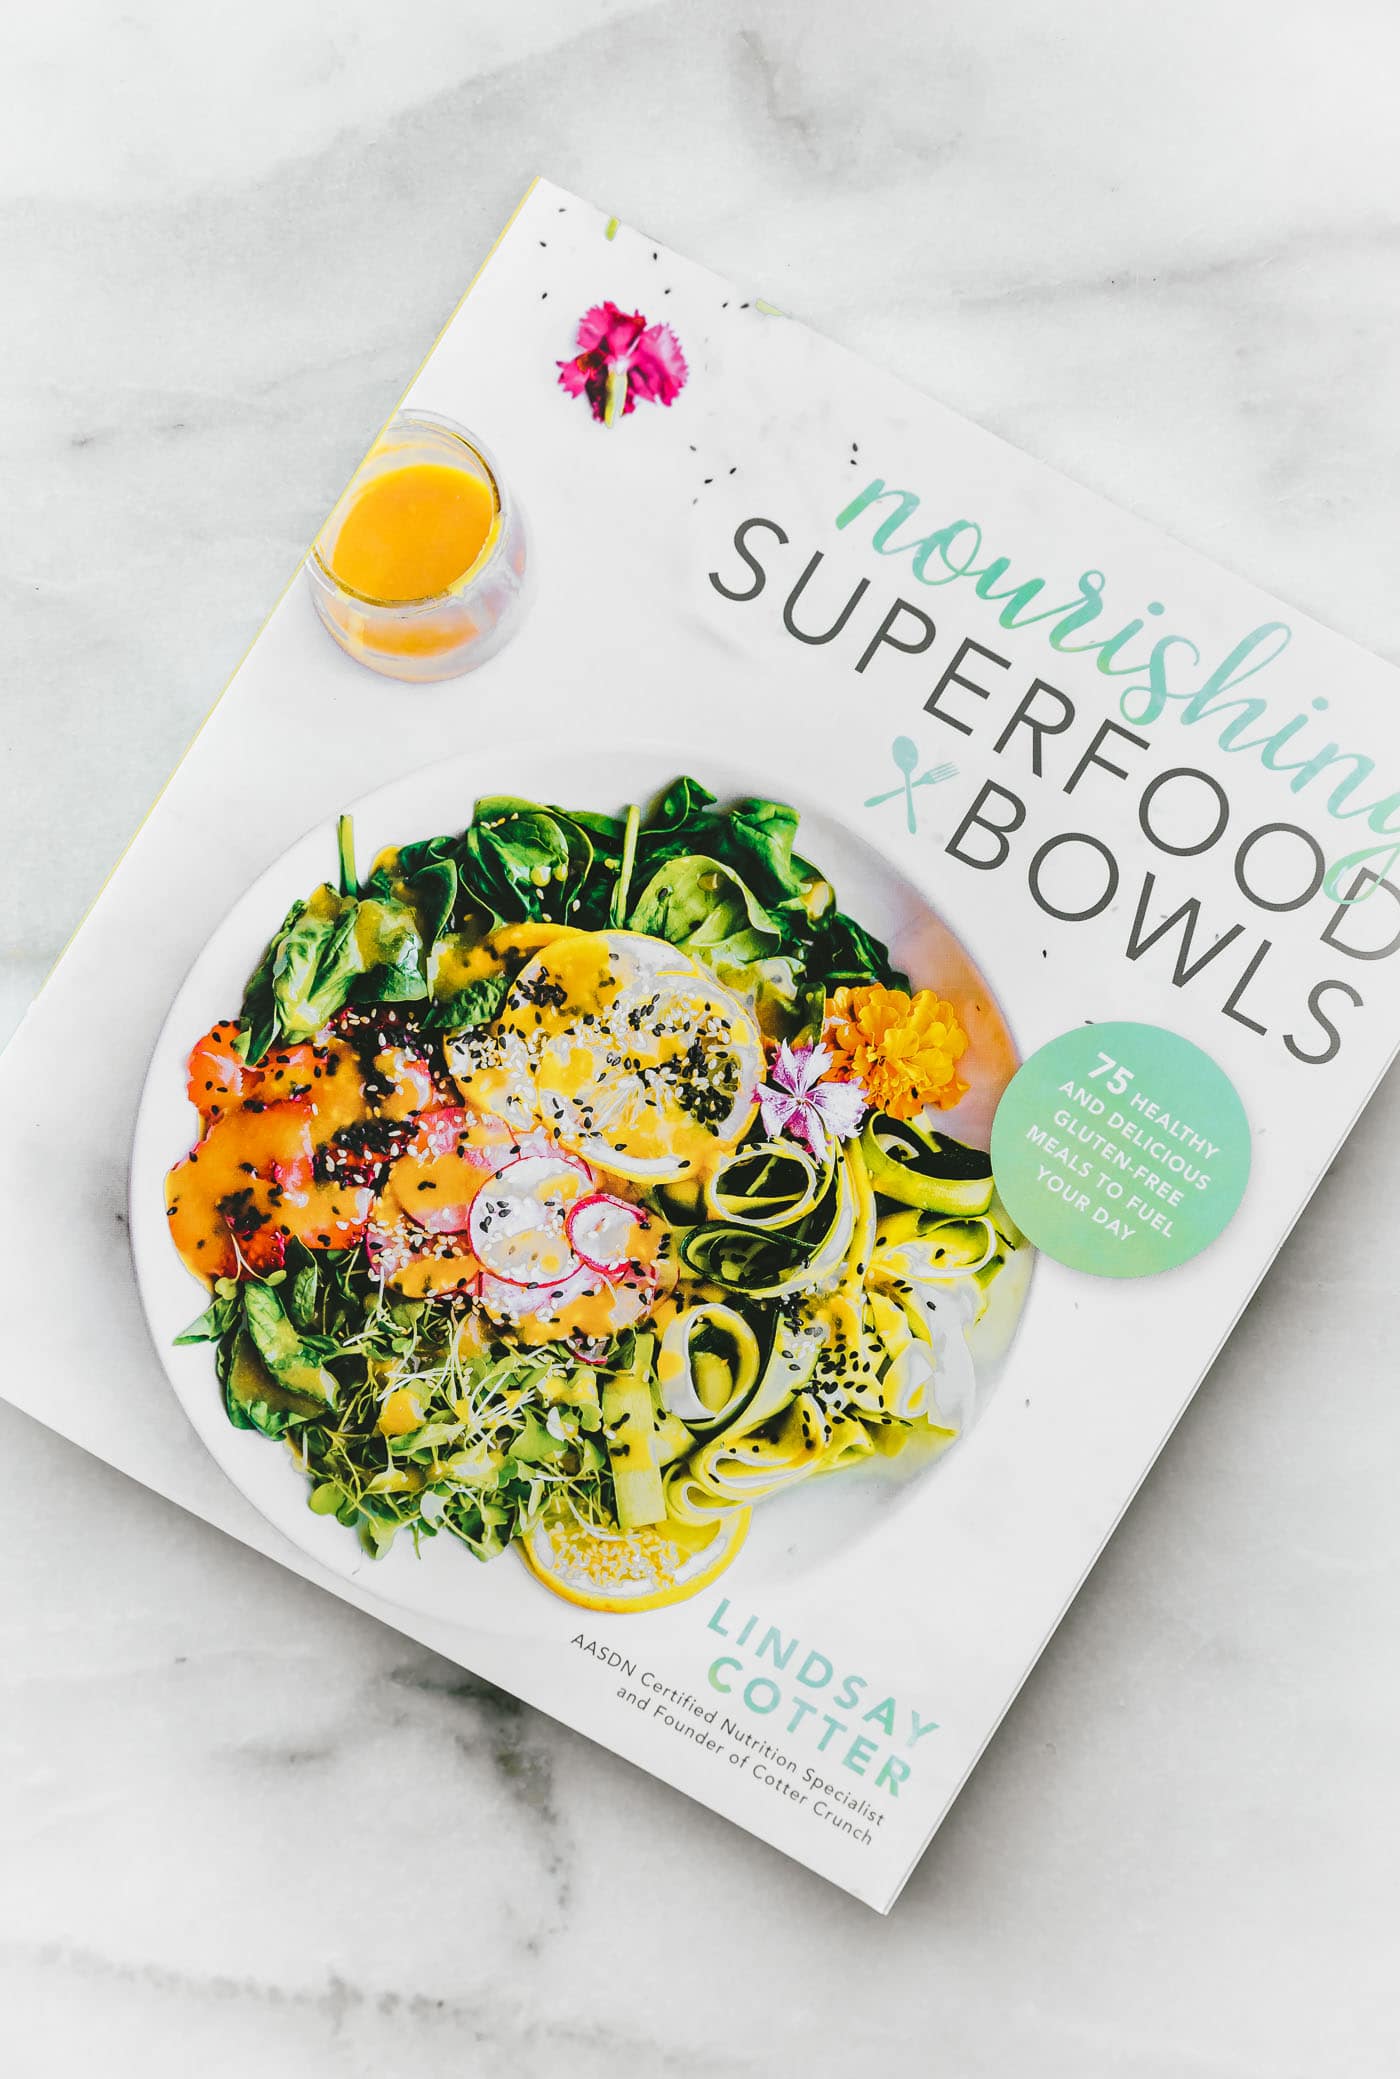 nourishing superfood bowls cookbook